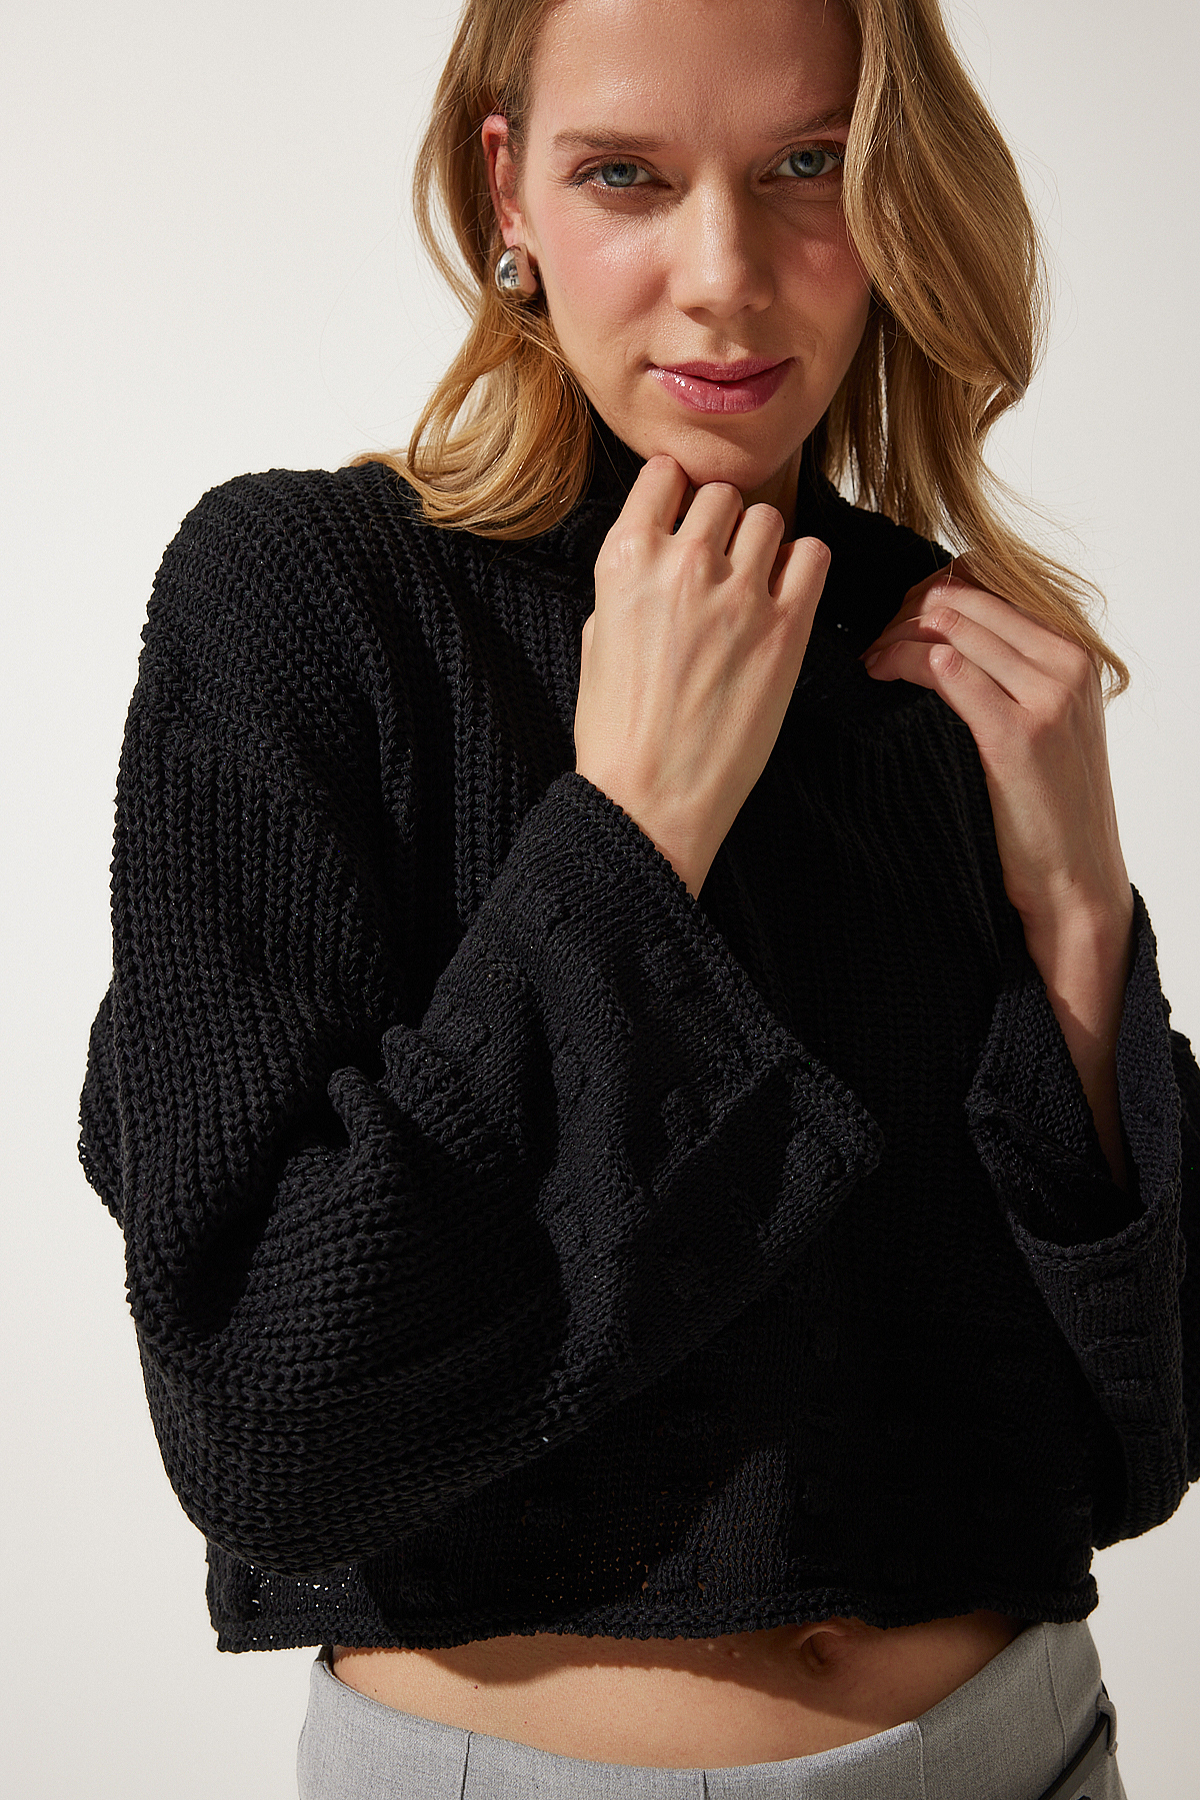 Levně Happiness İstanbul Women's Black Turtleneck Textured Seasonal Knitwear Sweater